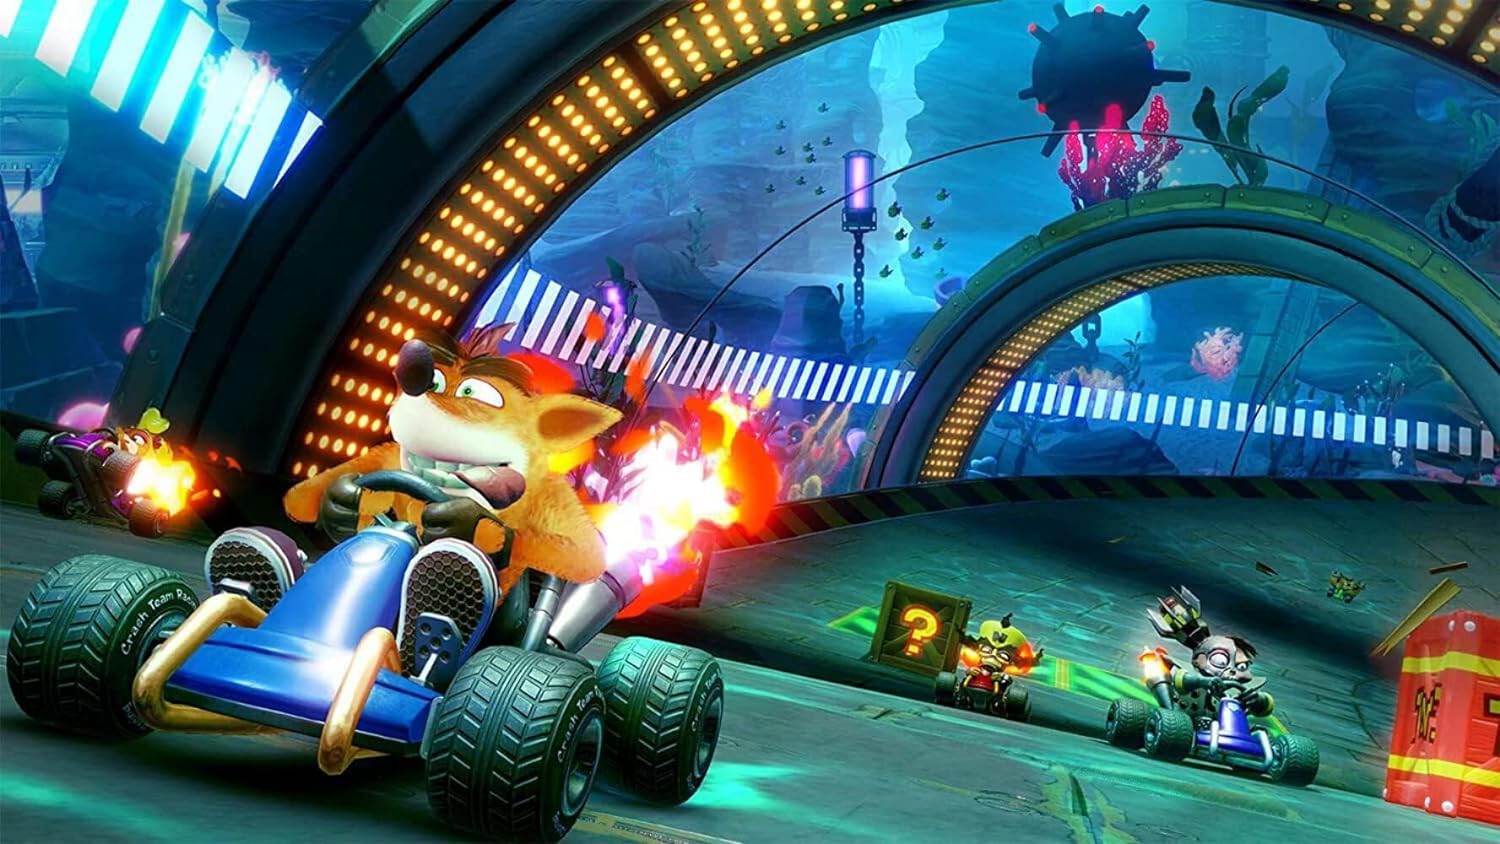 Crash Team Racing: Nitro-Fueled (PS4)